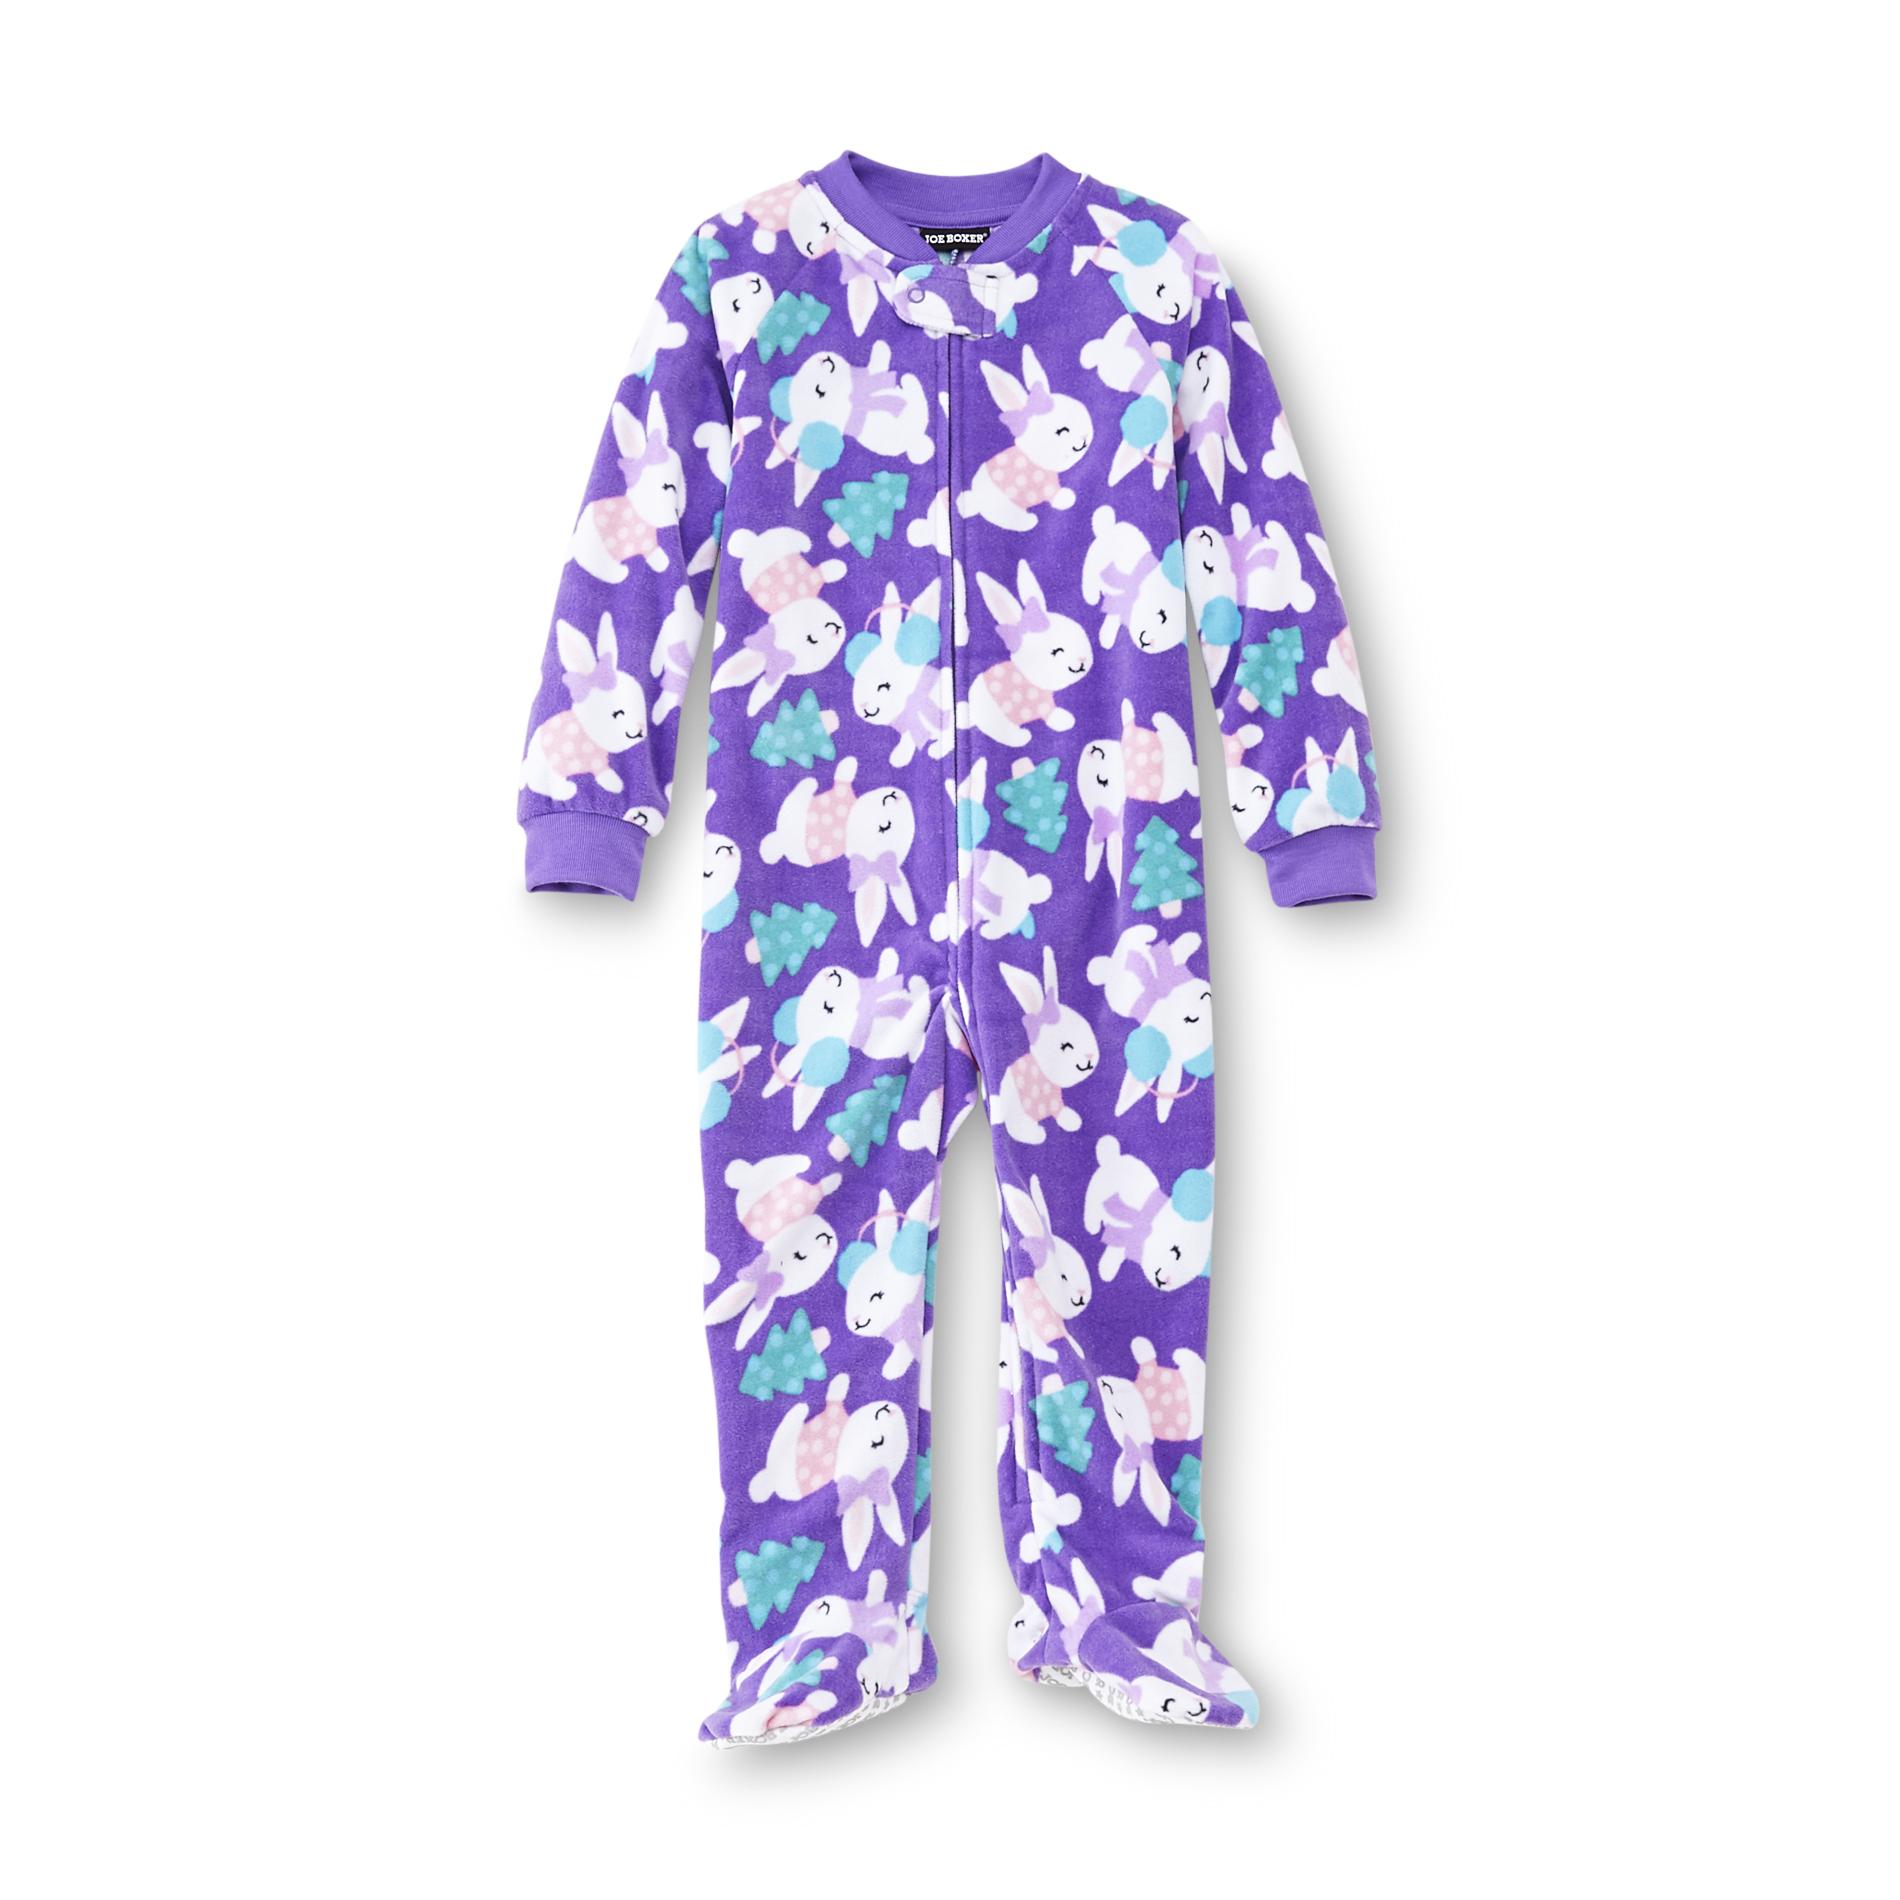 Joe Boxer Infant & Toddler Girl's Fleece Footed Pajamas - Bunnies